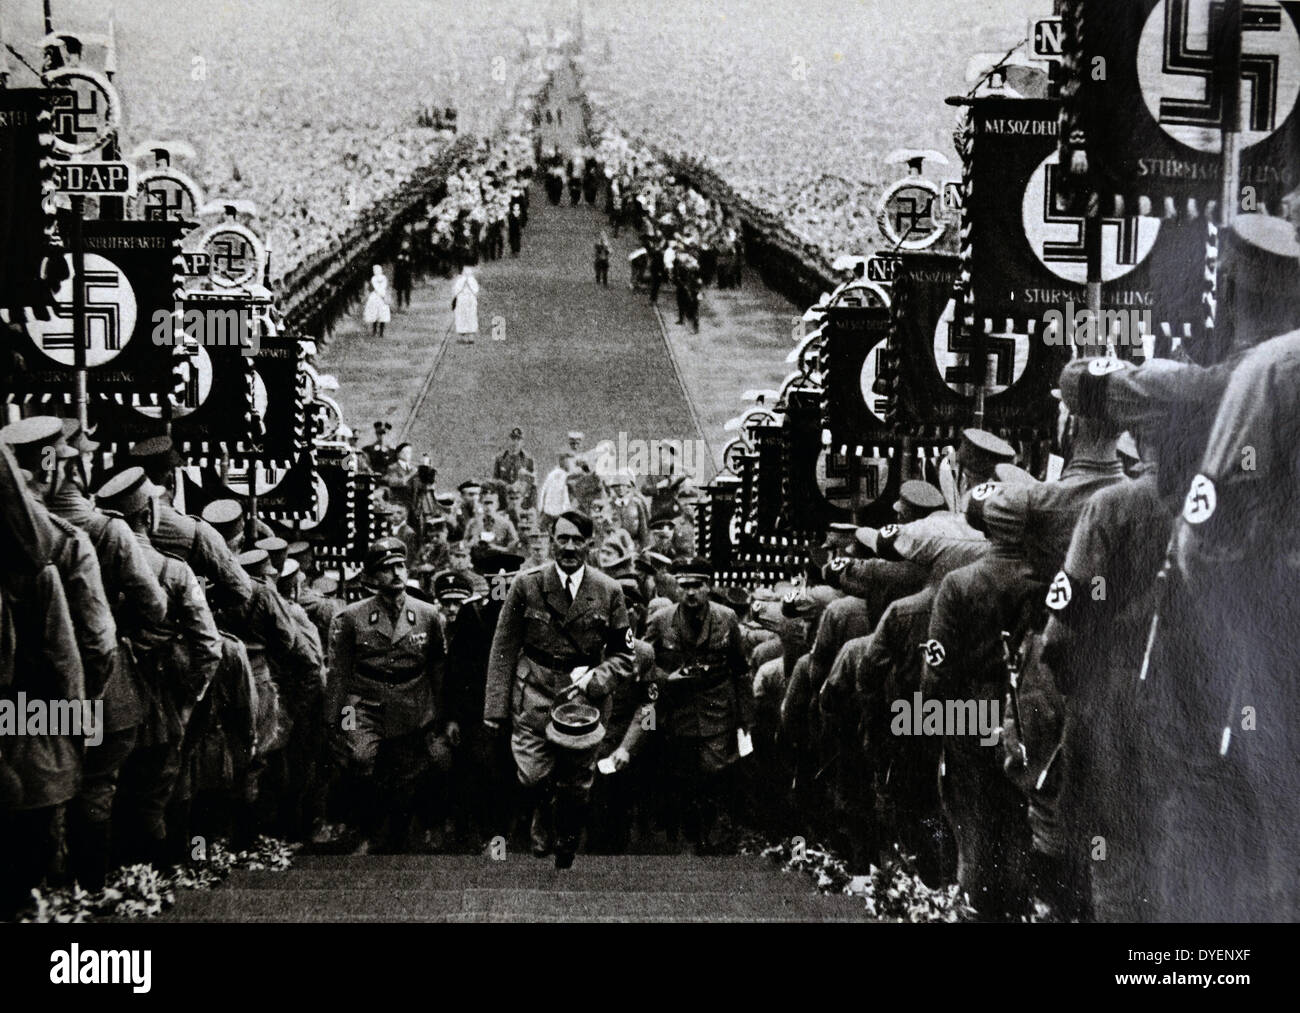 adolf-hitler-1889-1945-receiving-the-adulation-of-a-crowd-in-buckeberg-DYENXF.jpg